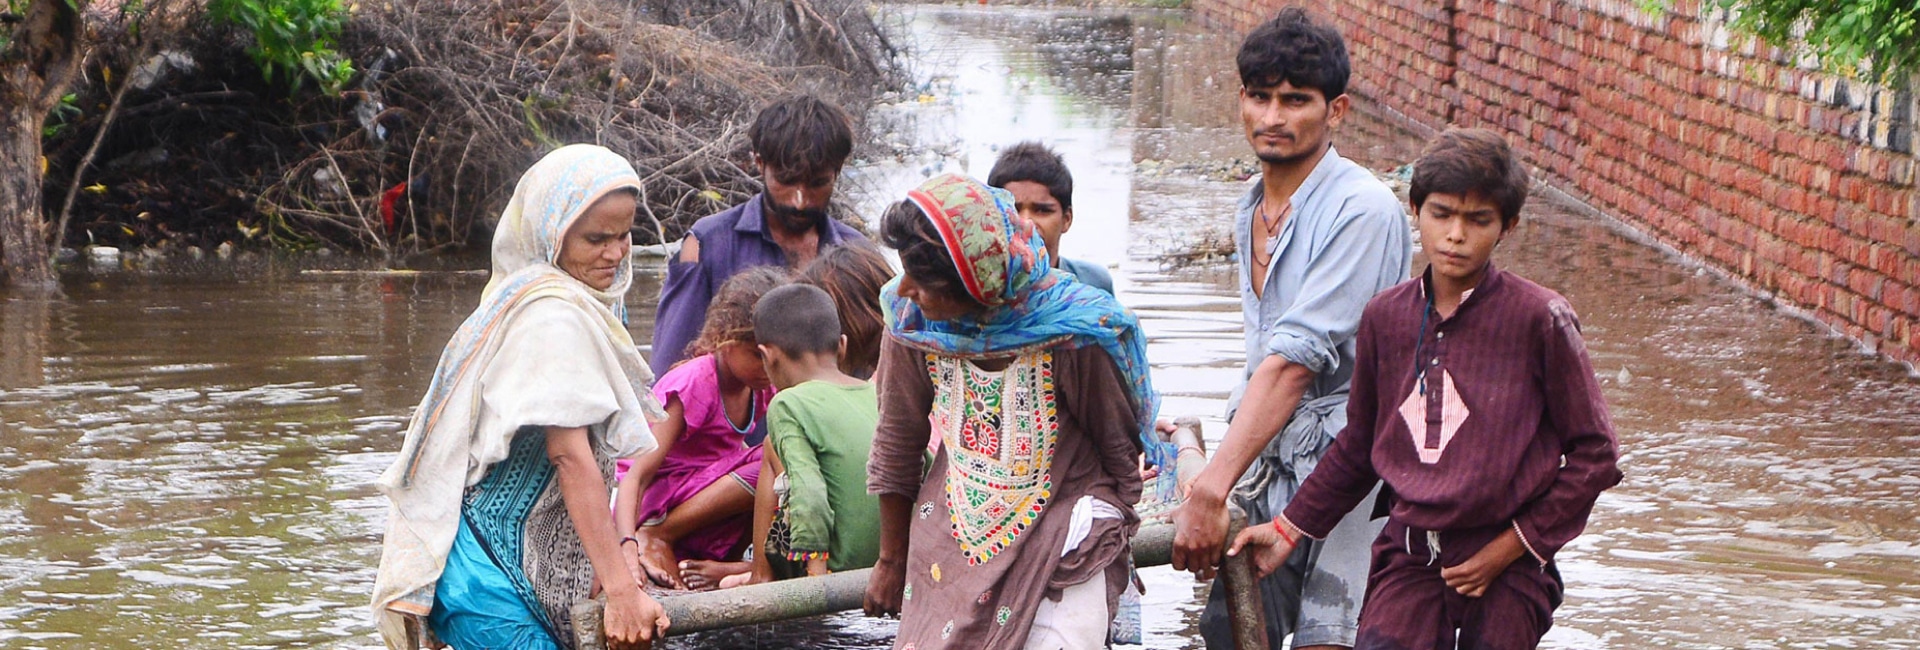 pakistan-flood-relief